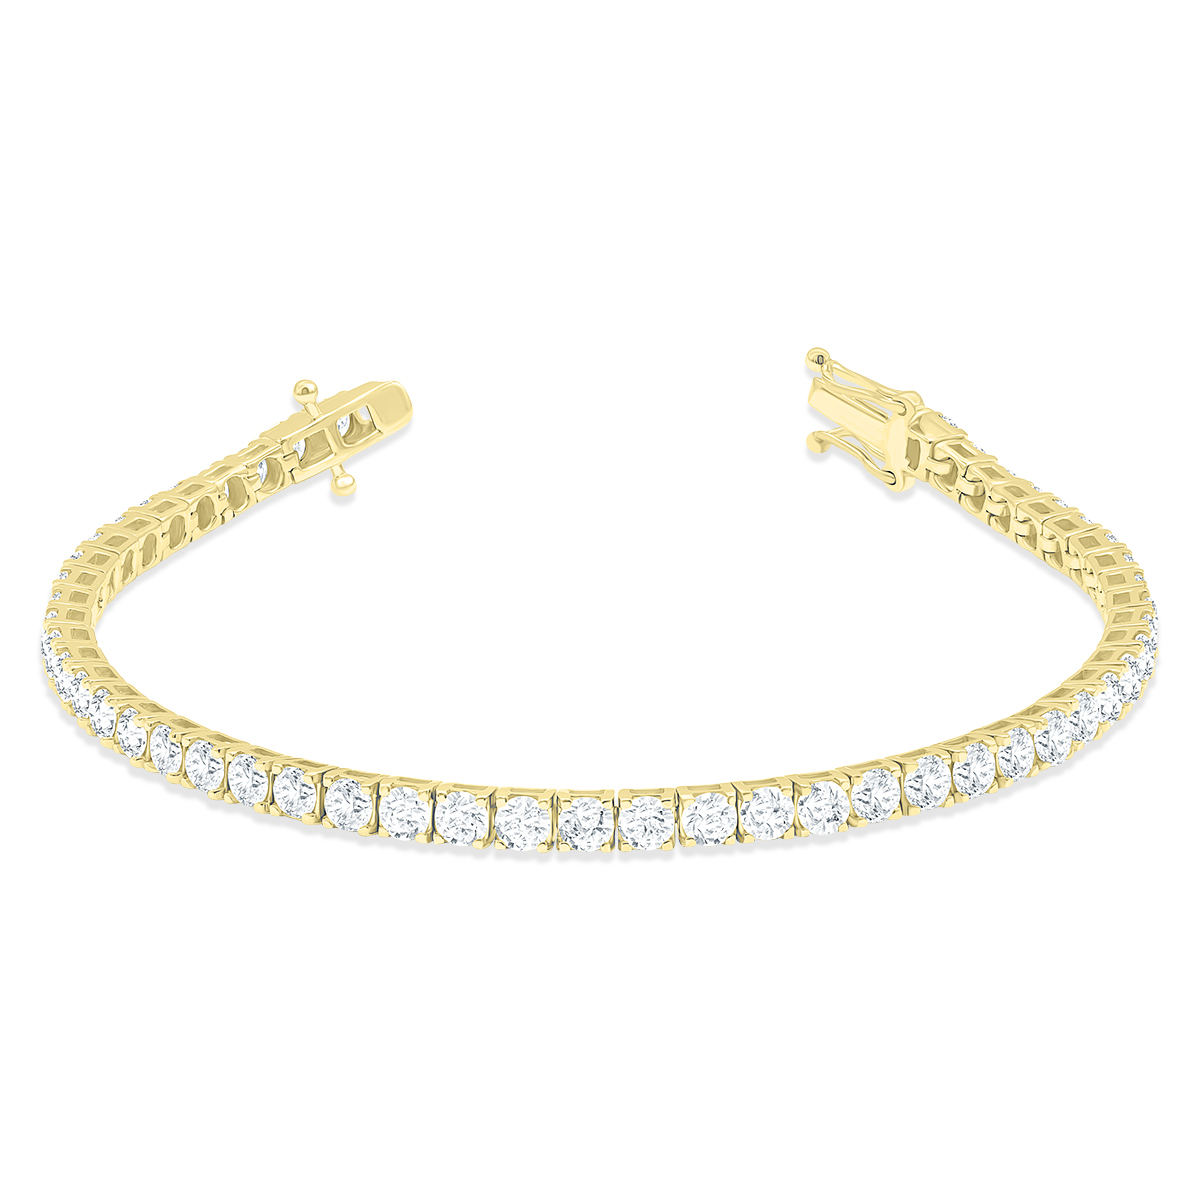 8 Carat TW Diamond Tennis Bracelet in 14K Yellow Gold